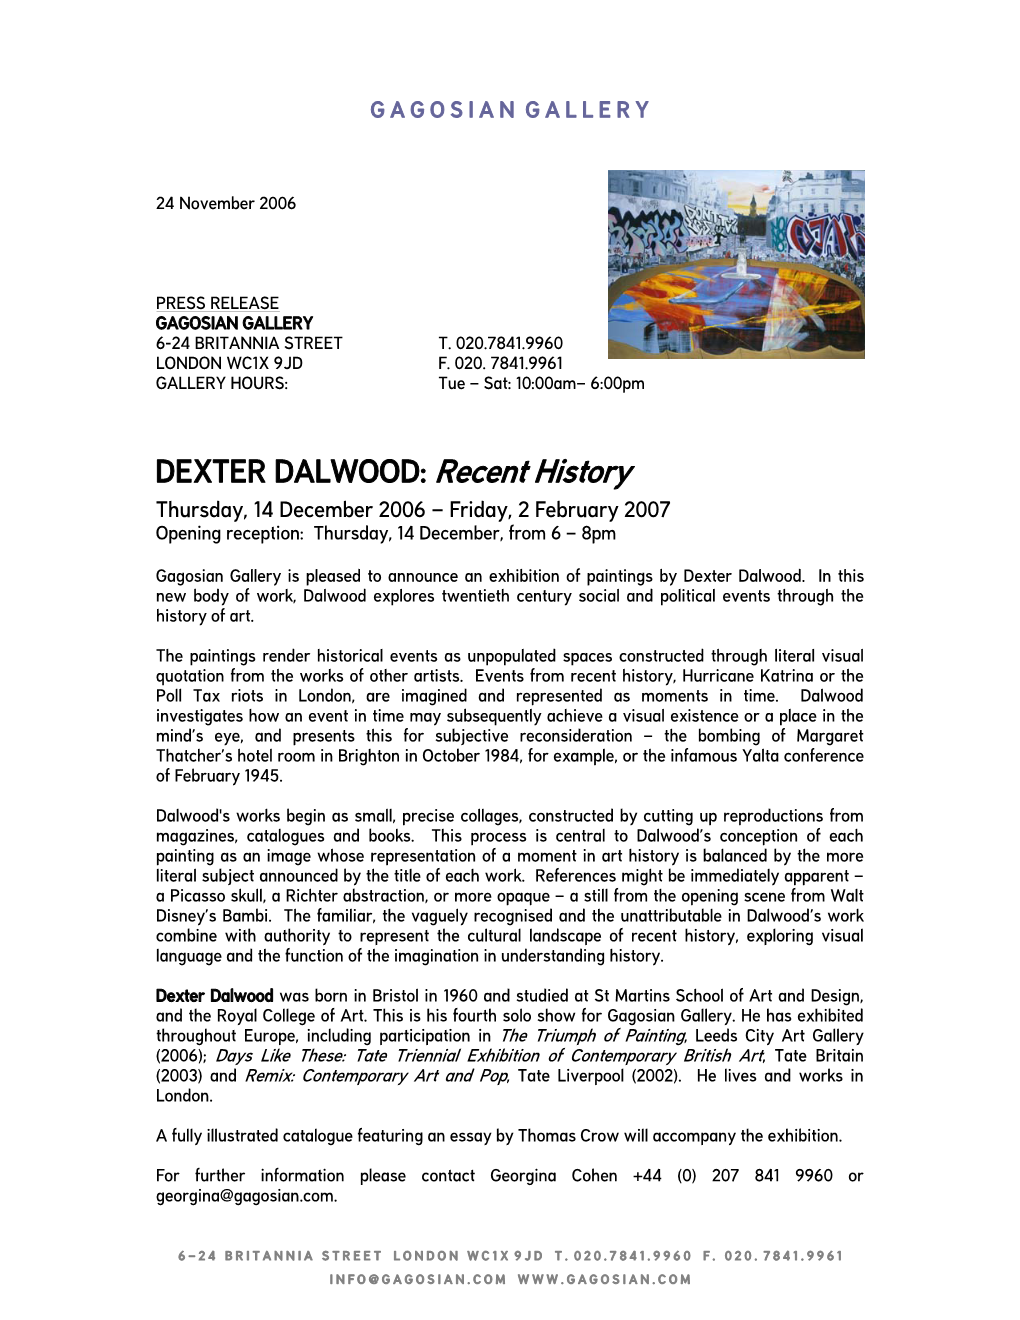 DEXTER DALWOOD: Recent History